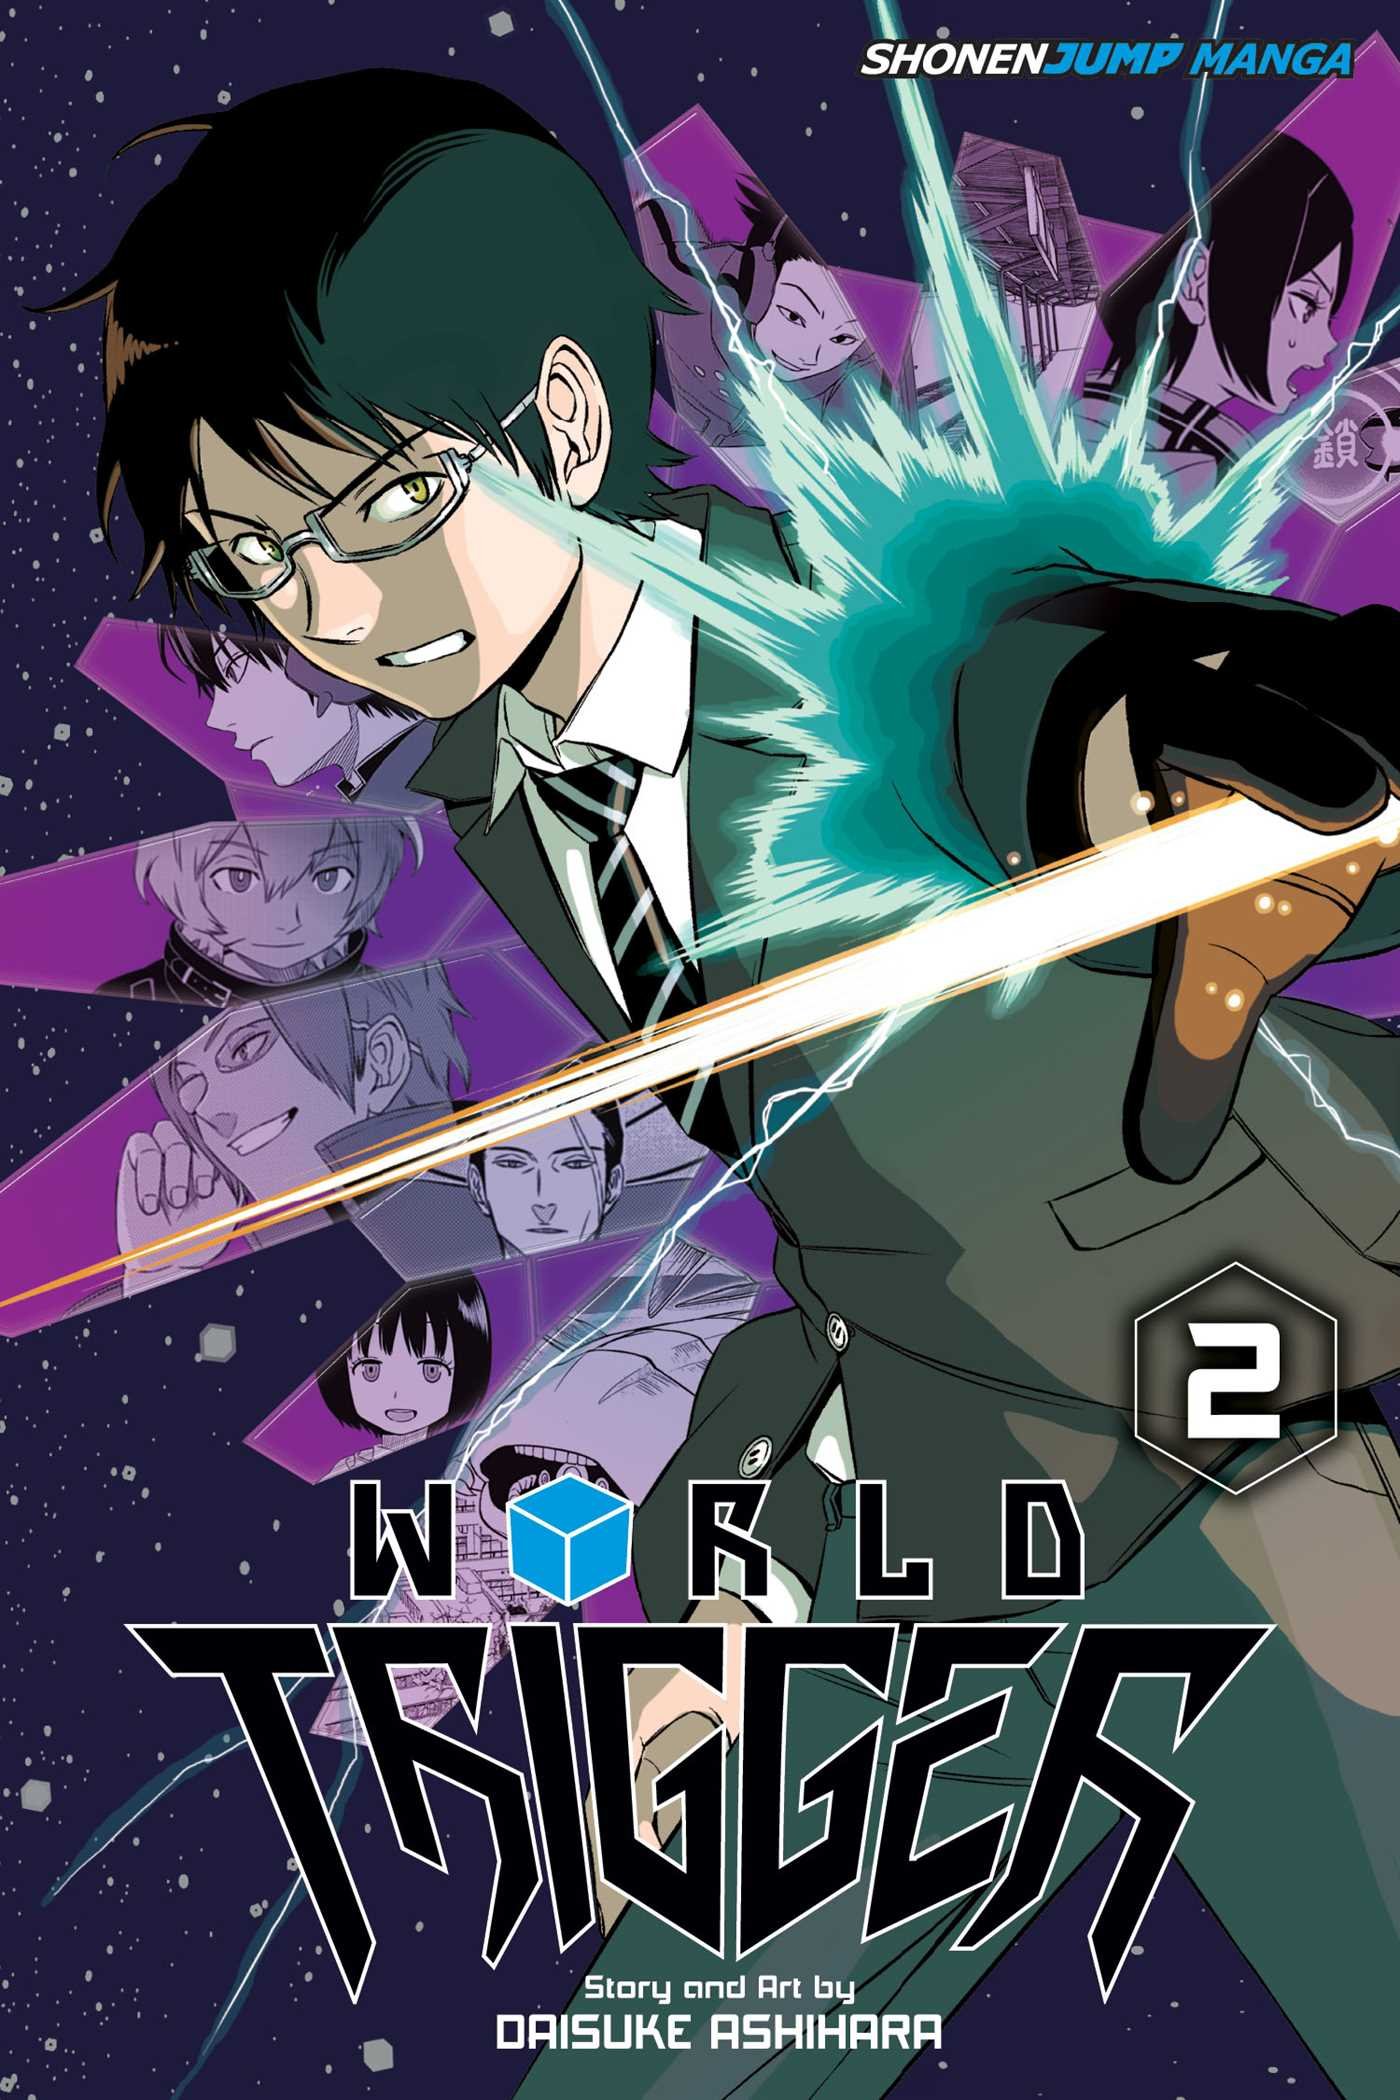 animate】(DVD) World Trigger TV Series 2nd Season VOL. 3【official】